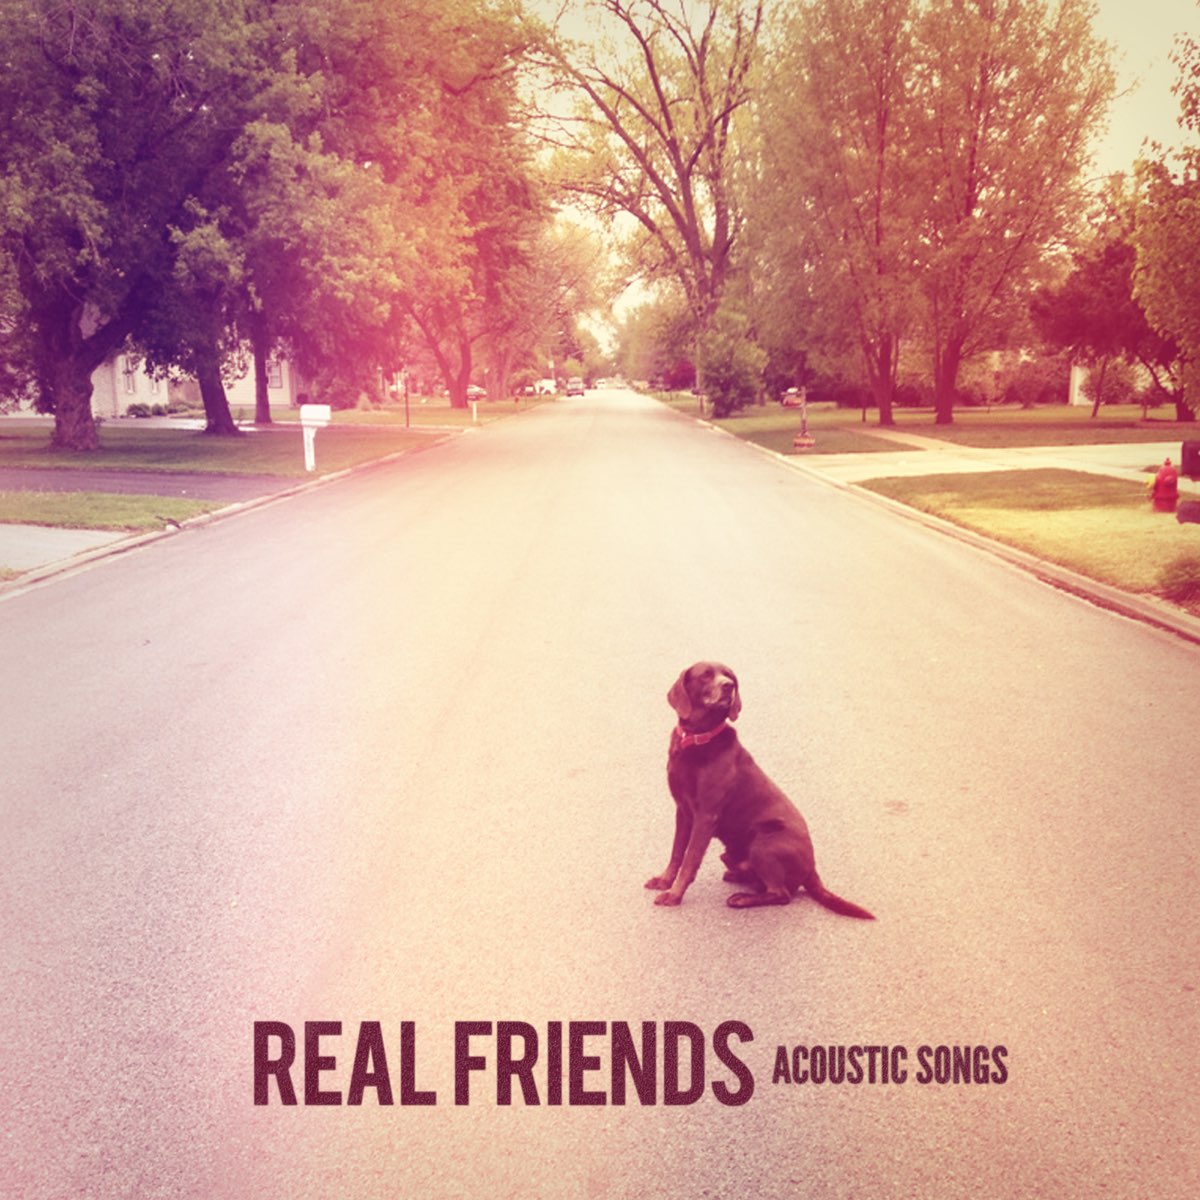 Песня май друзья. Реал френдс. Real friends. Go friend песня. Friends песня.